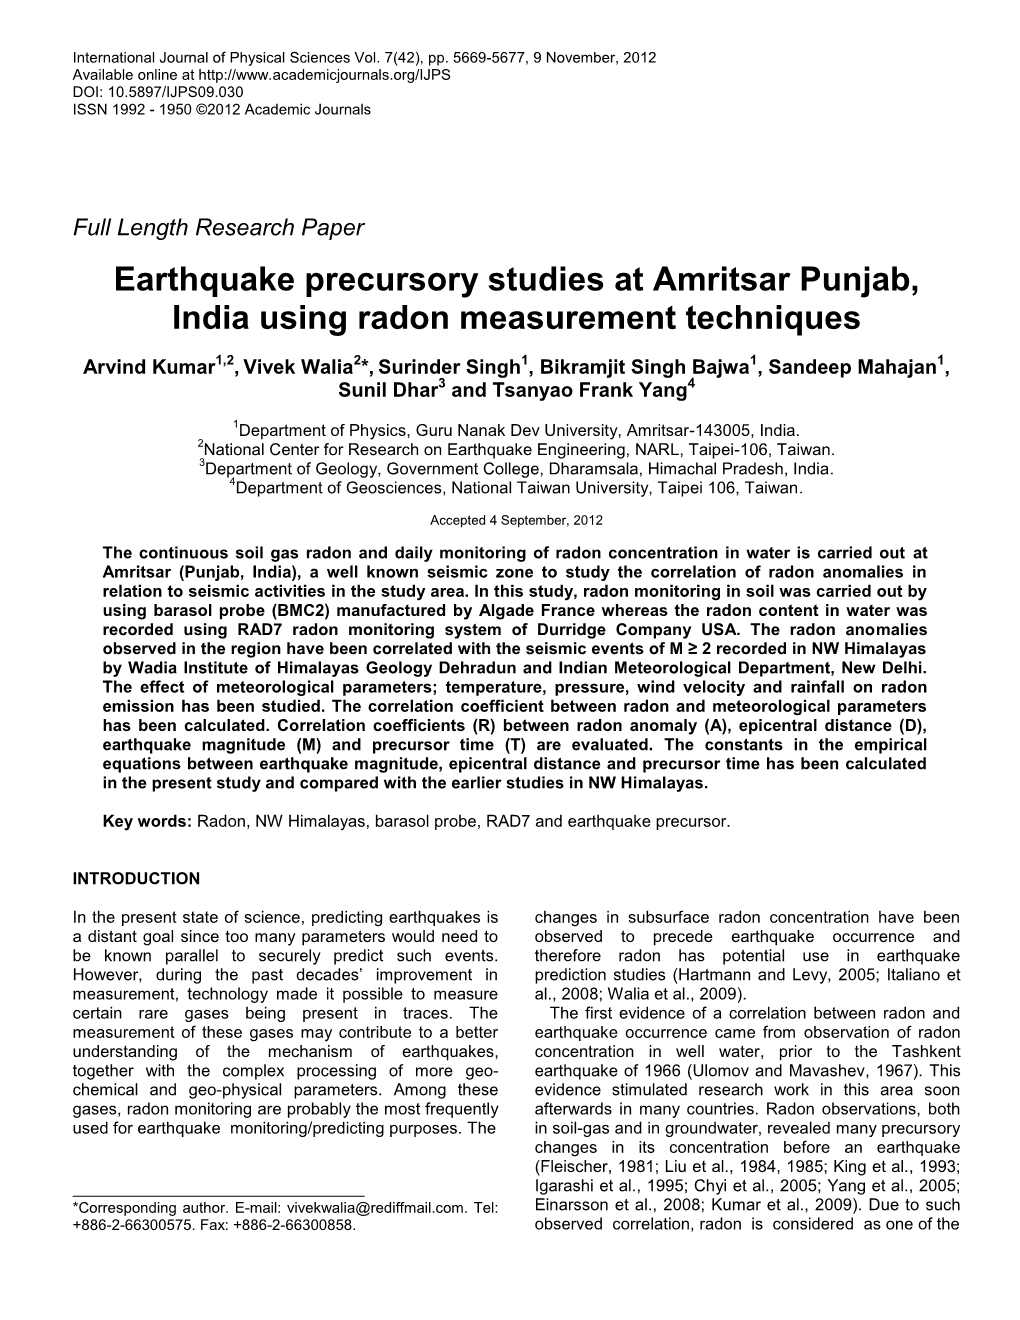 Earthquake Precursory Studies at Amritsar Punjab, India Using Radon Measurement Techniques